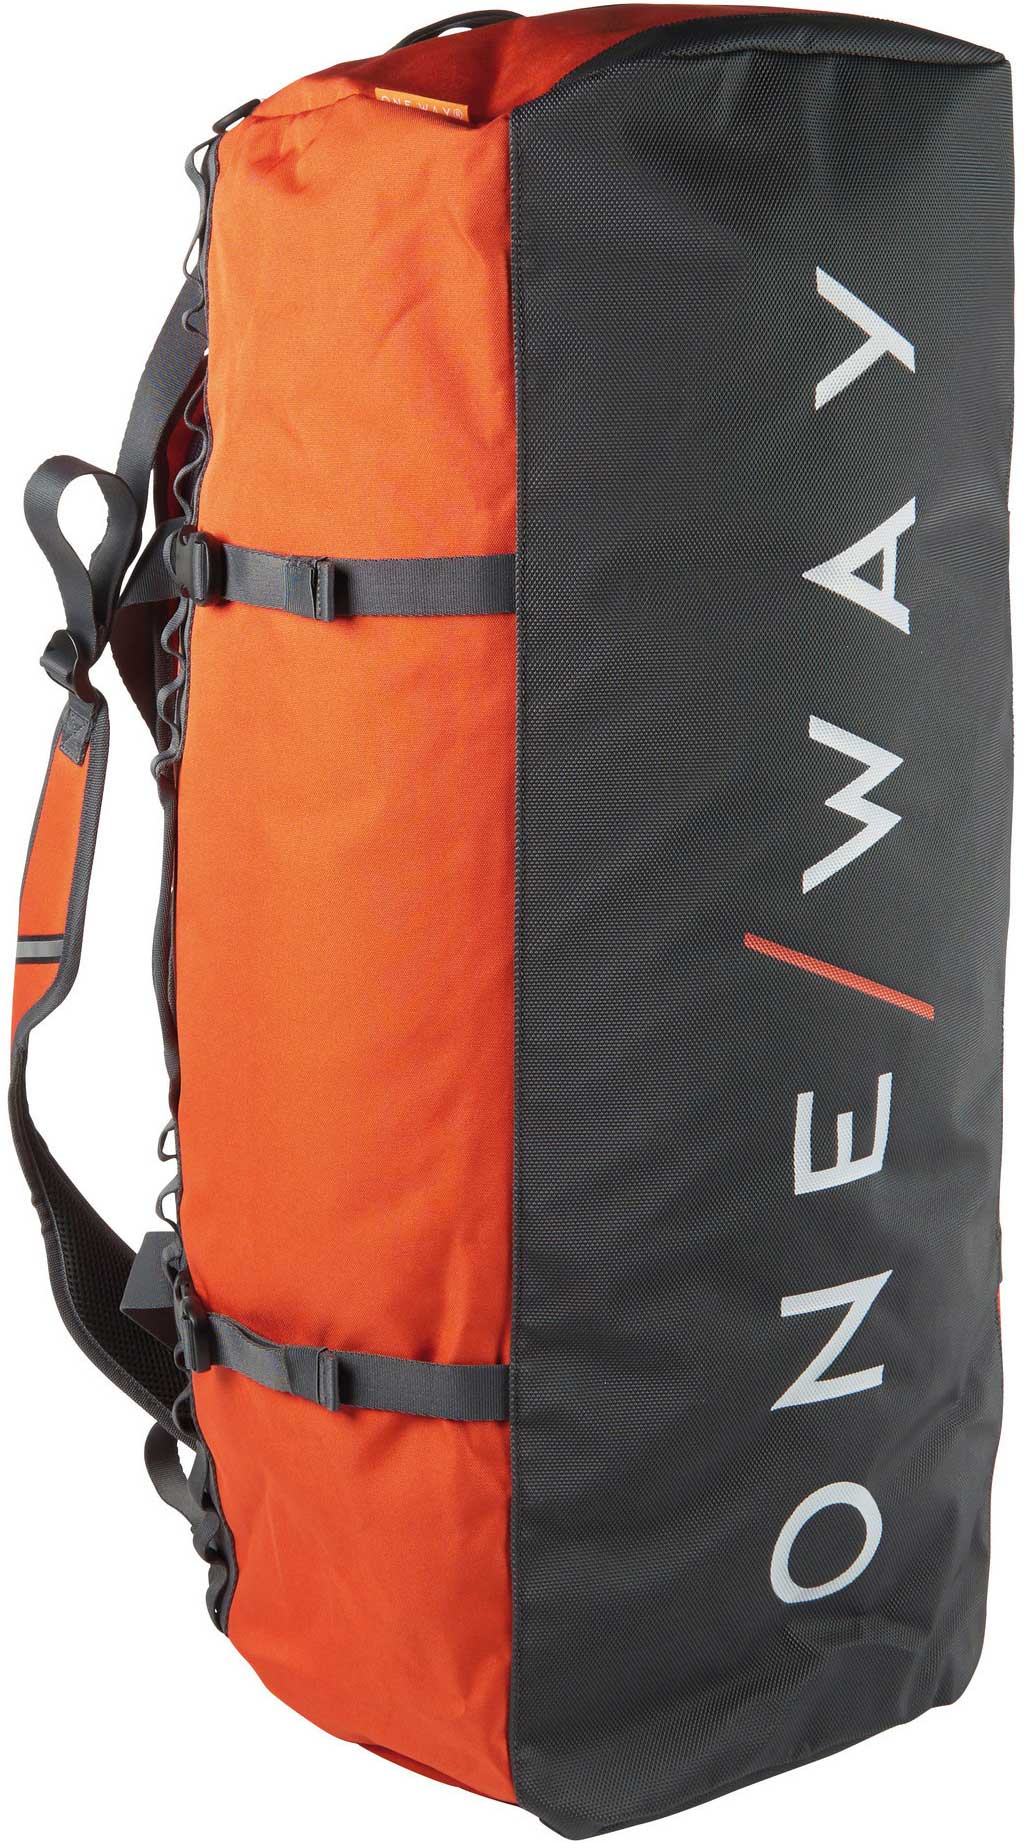 Large travel bag